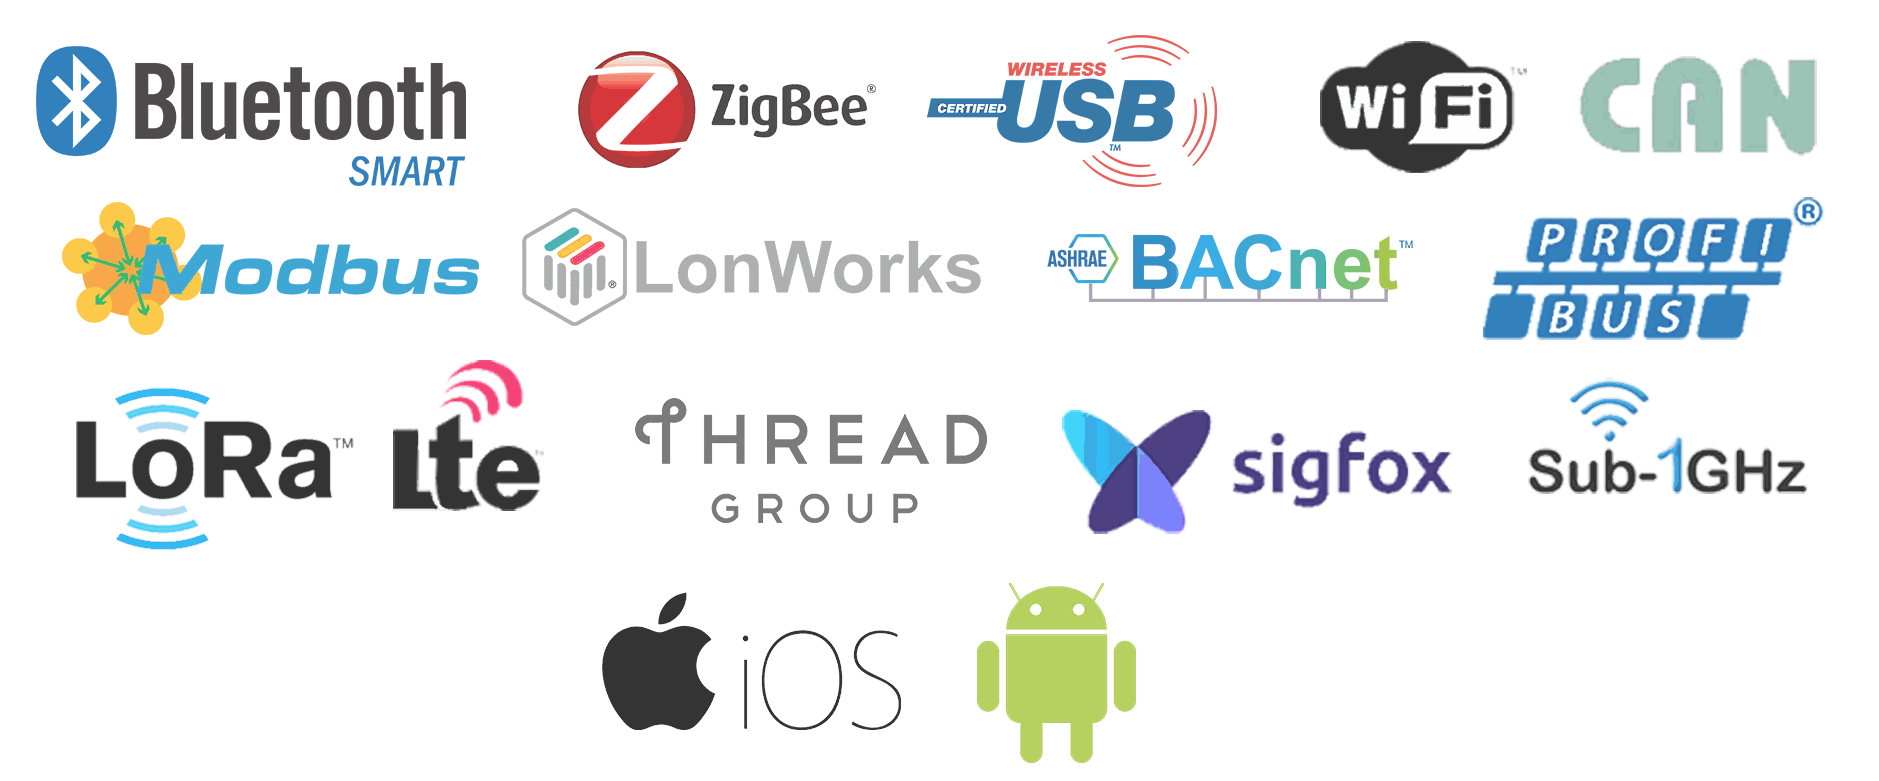 Bluetooth, WiFi, Android, iOS, LPWAN, USB, SigFox, Mesh, thread, Lora